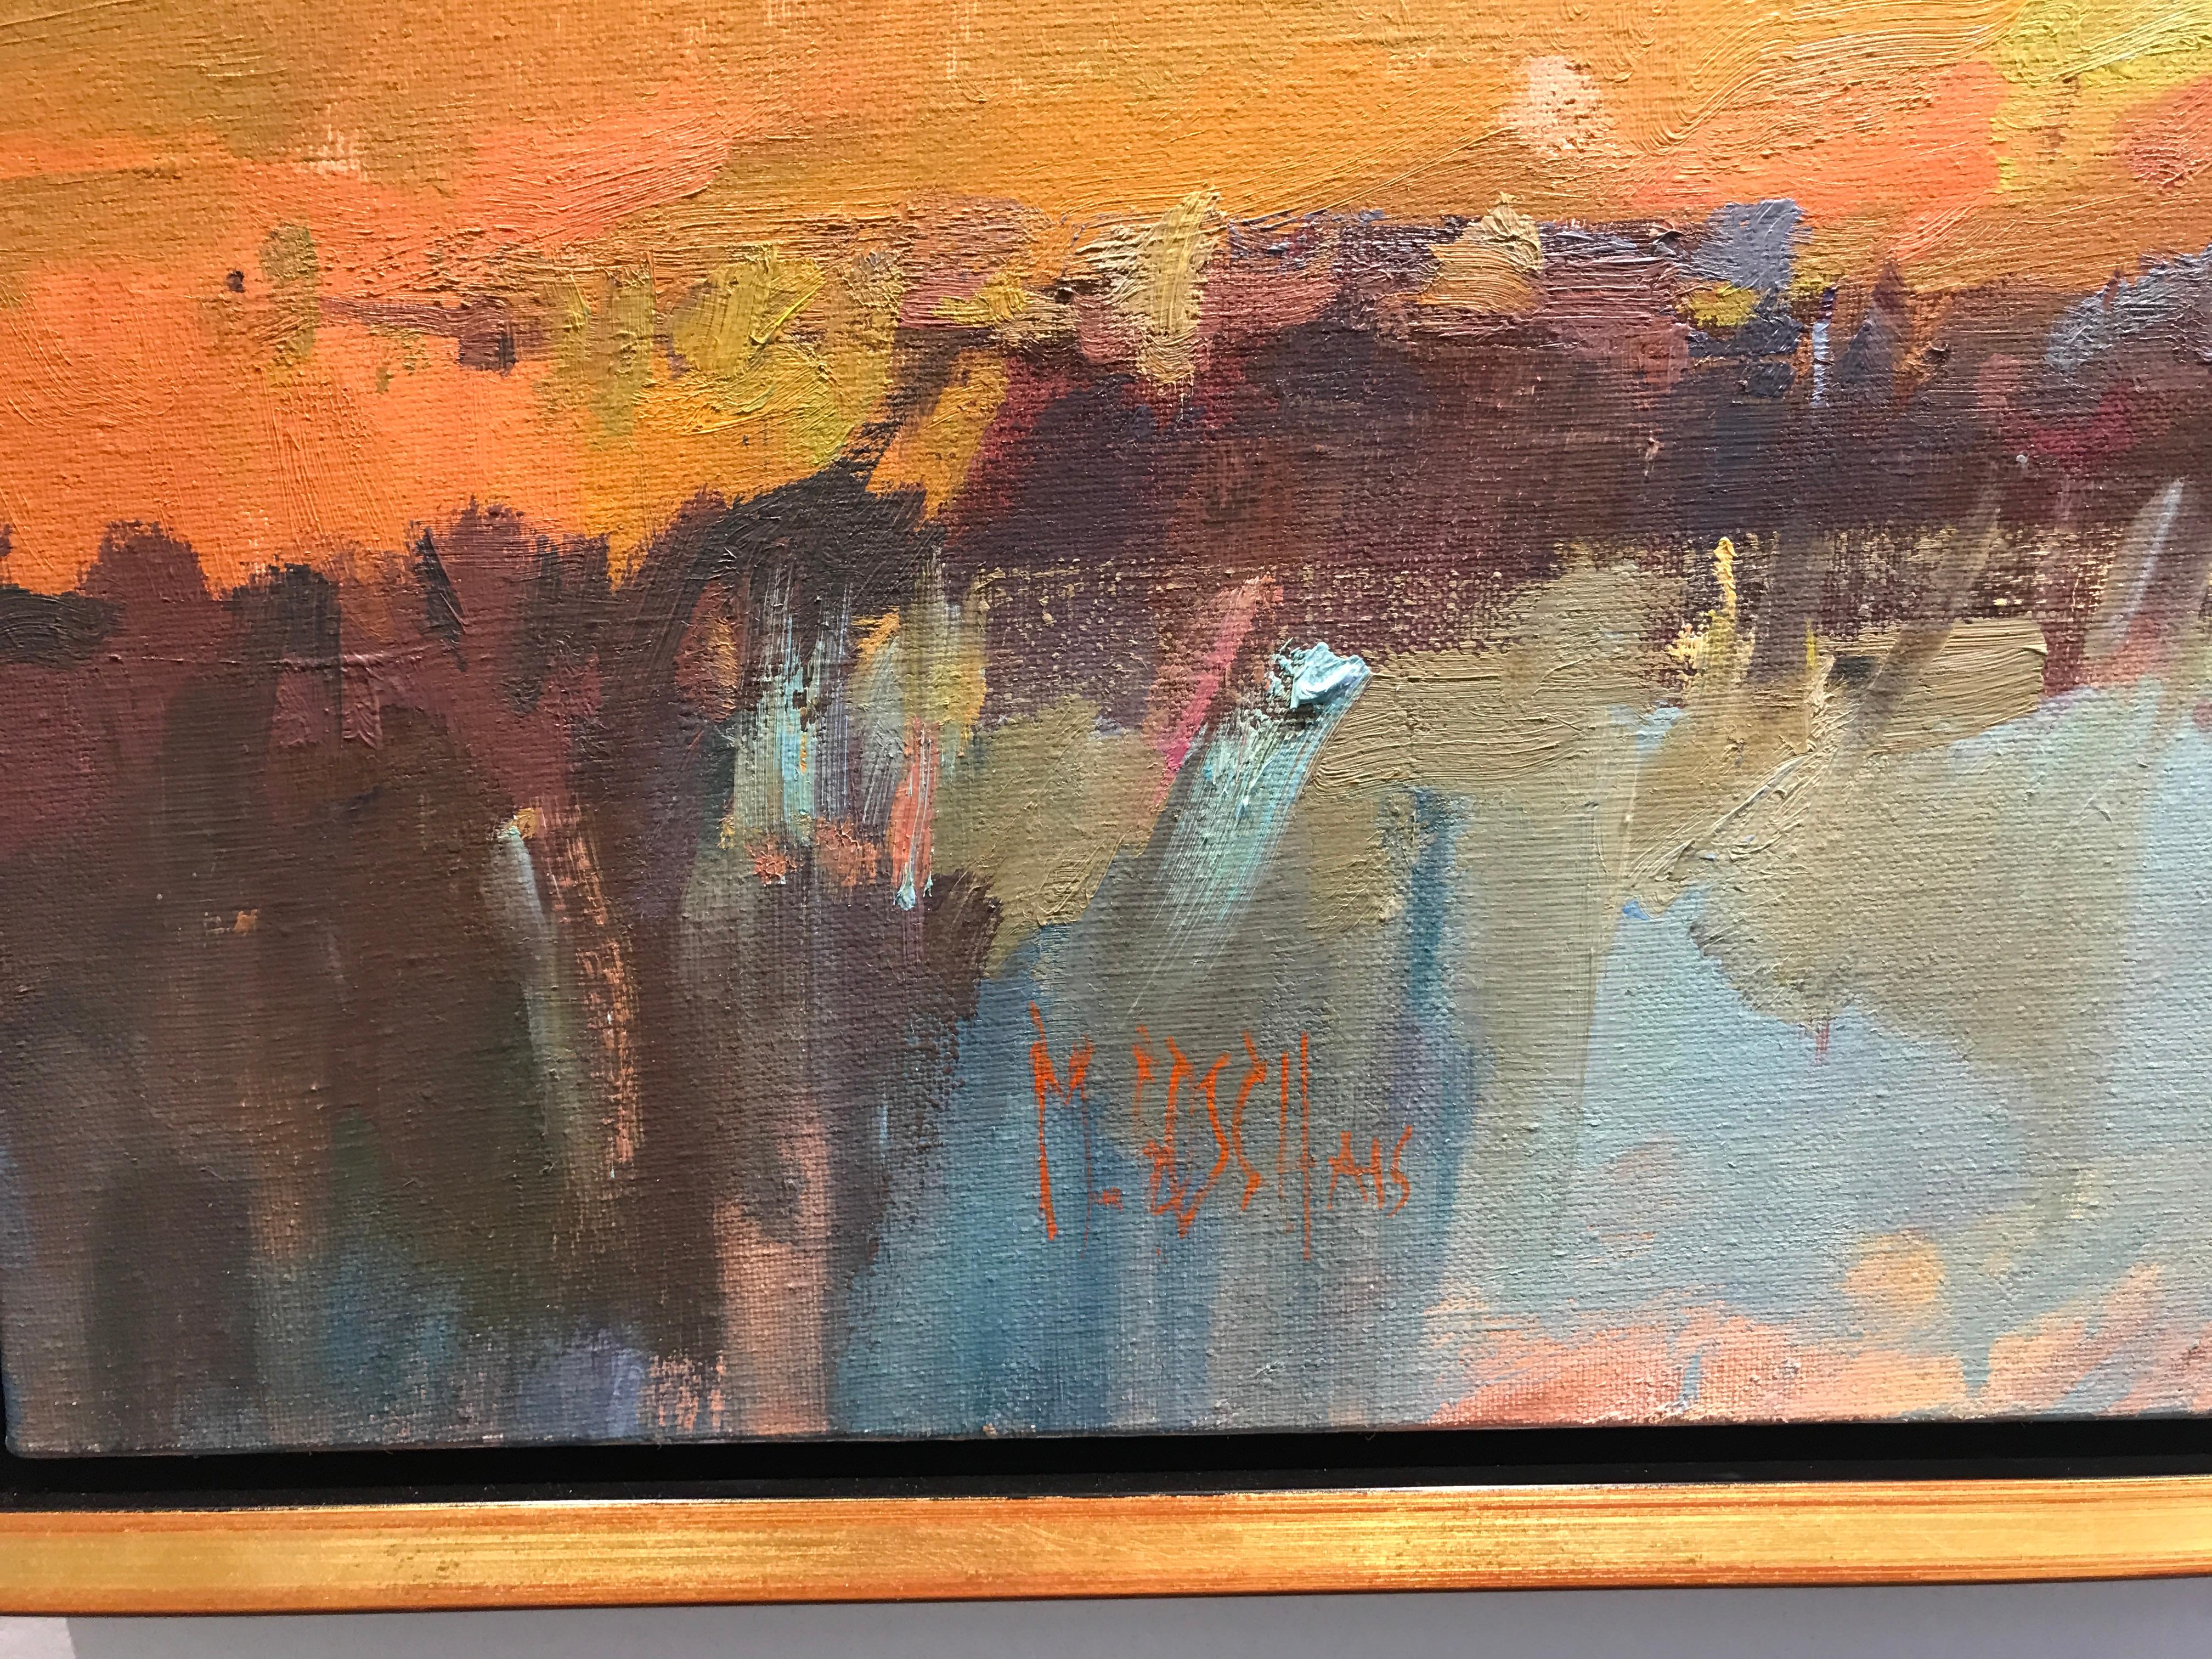 Summer Glory, Millie Gosch 2018 Impressionist Oil on Canvas Plein Air Painting 4